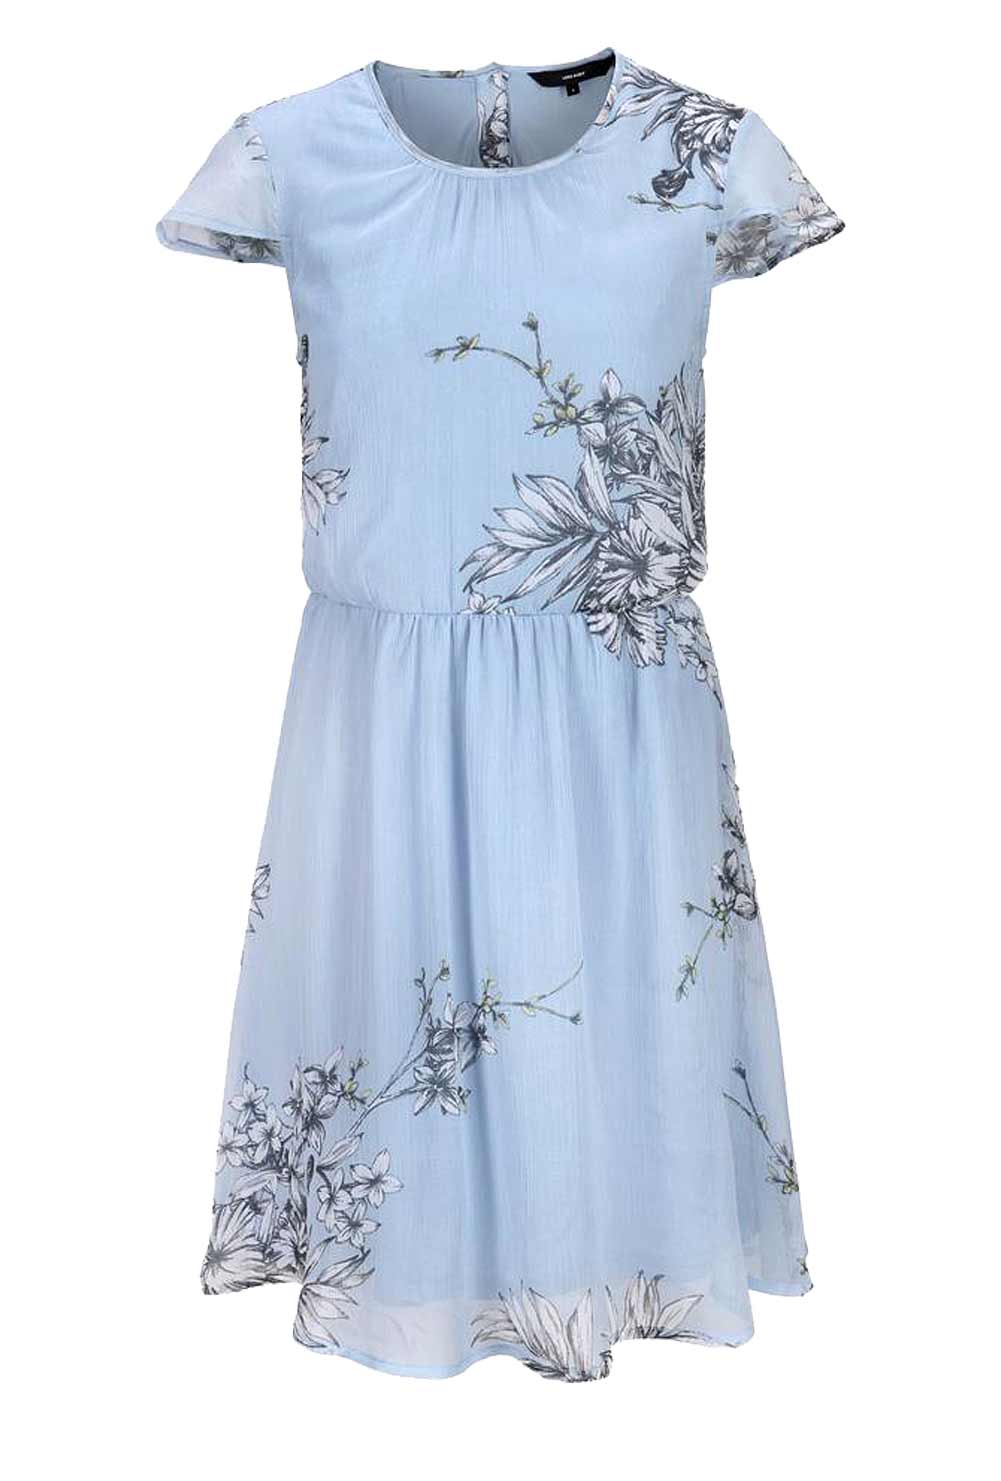 Vero Moda Damen Marken-Chiffon-Kleid "SATINA", hellblau